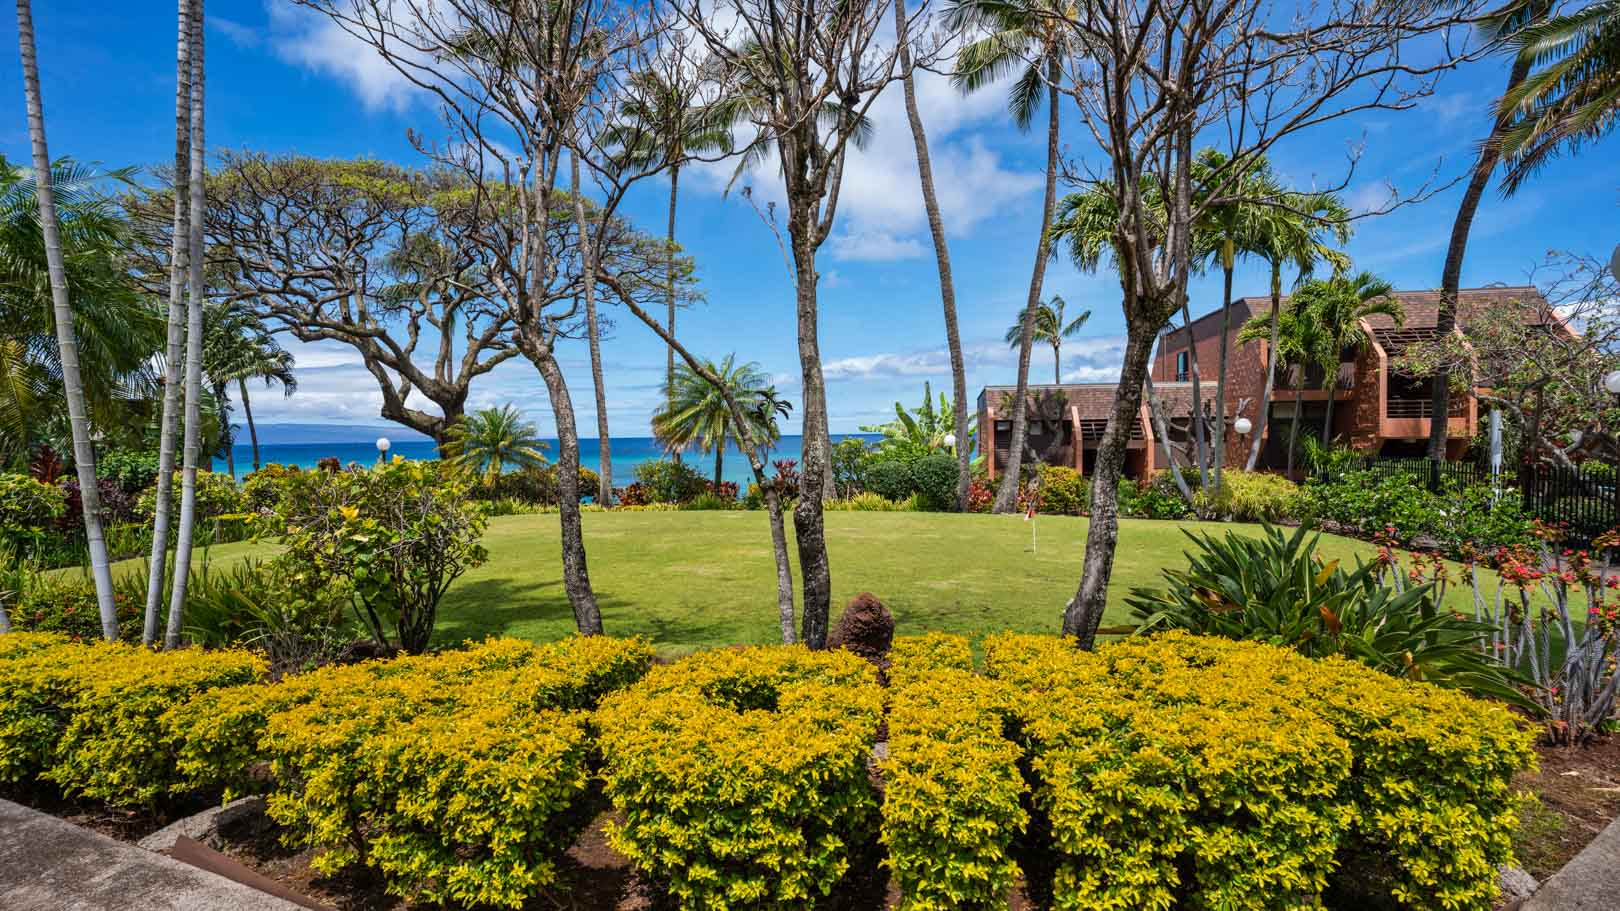 A tropical view of the greenery at VRI's Kuleana Club in Maui, Hawaii.